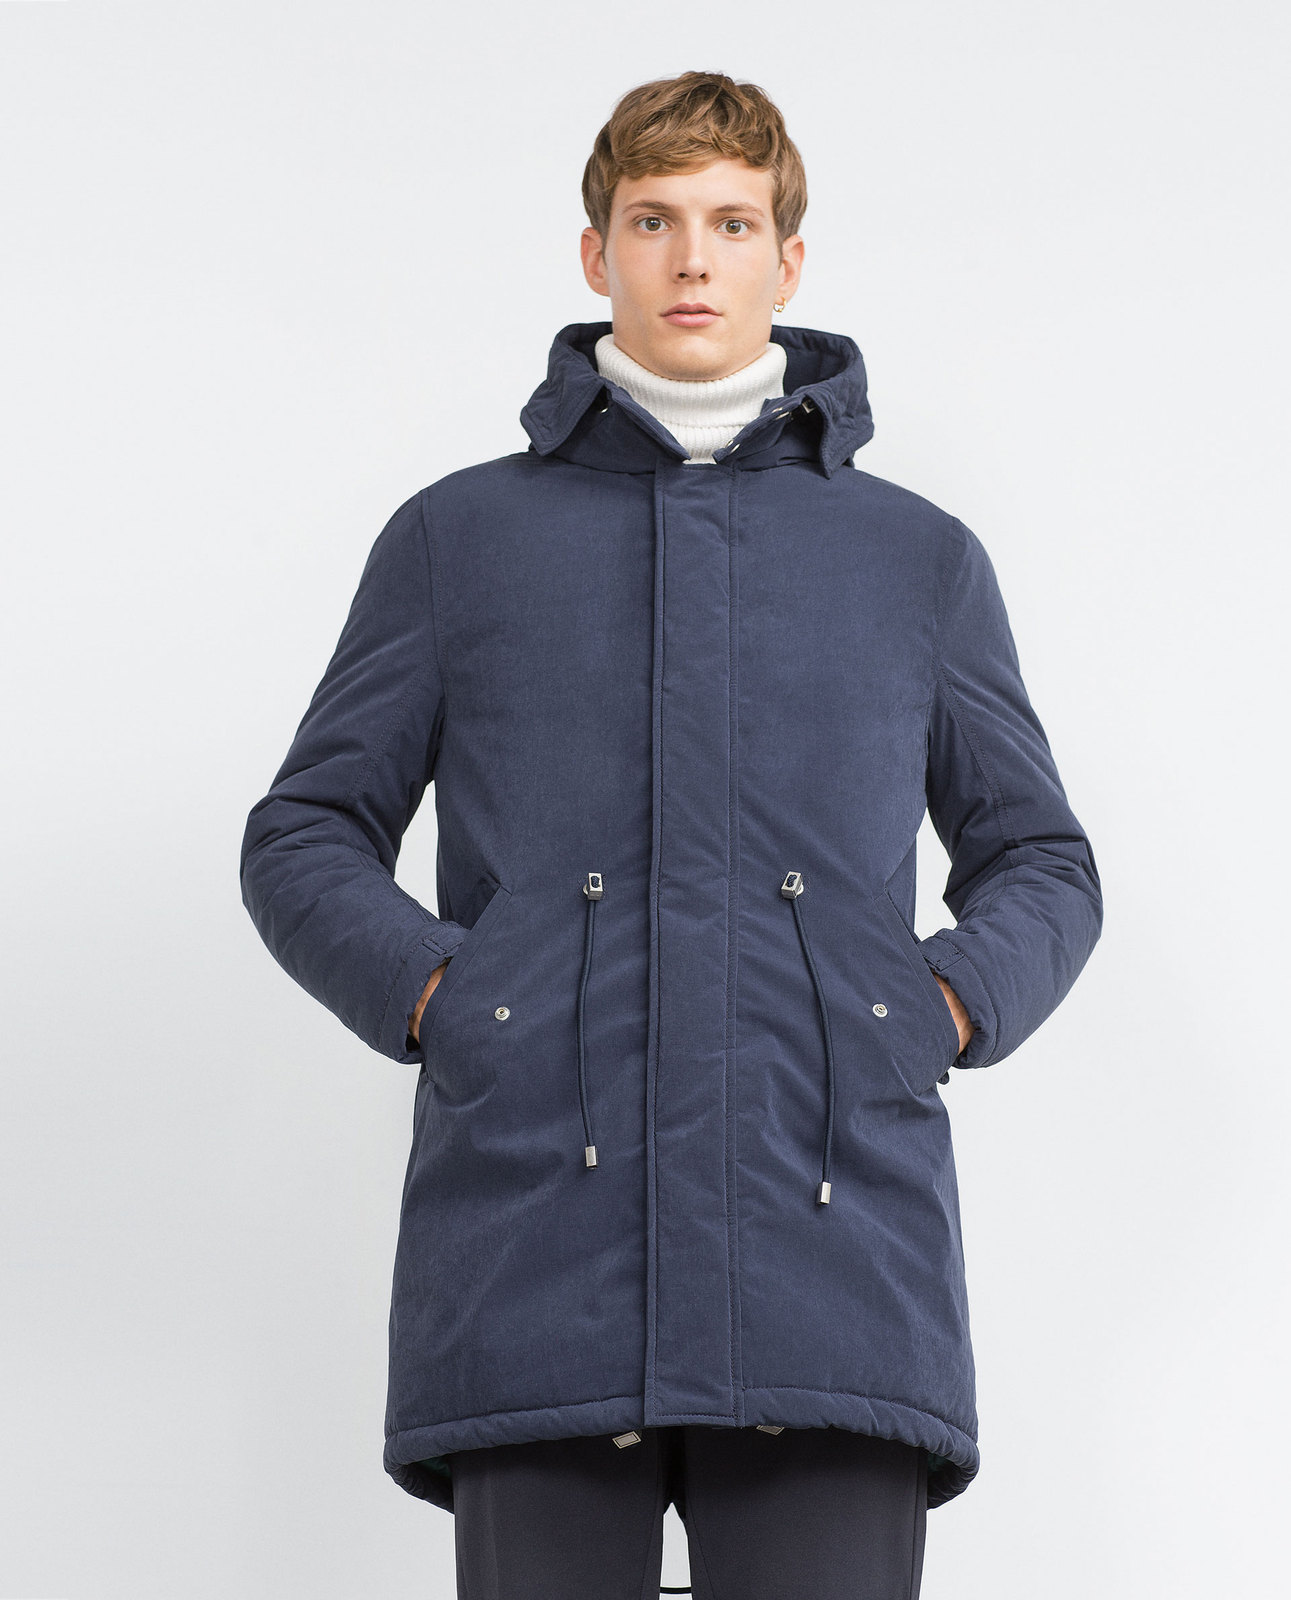 Zara kék kapucnis téli kabát 2015.10.15 fotója